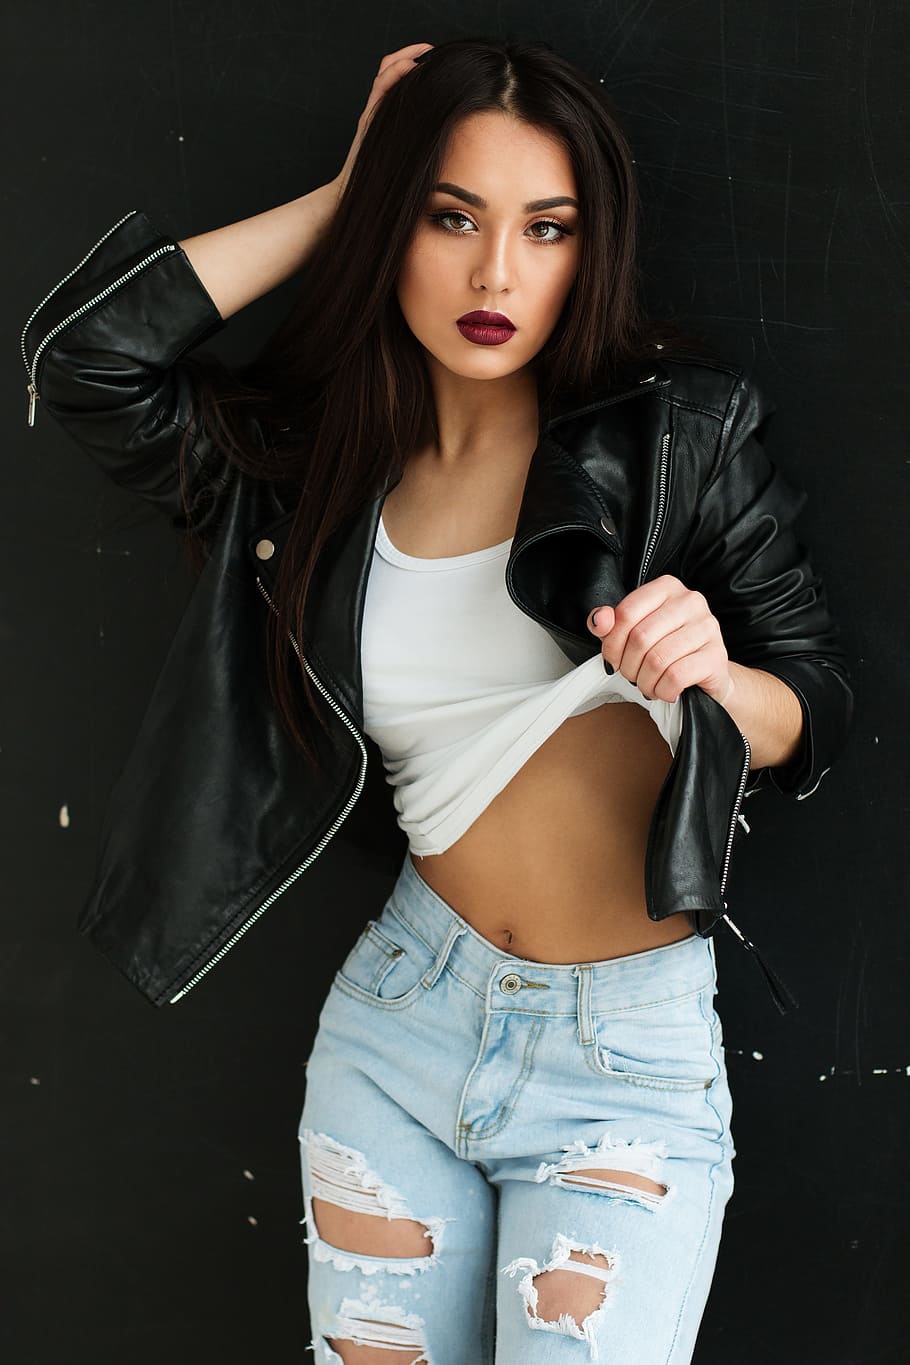 woman, black, leather jacket, girl, fashion, makeup, beauty, model, ripped jeans, leather krtka